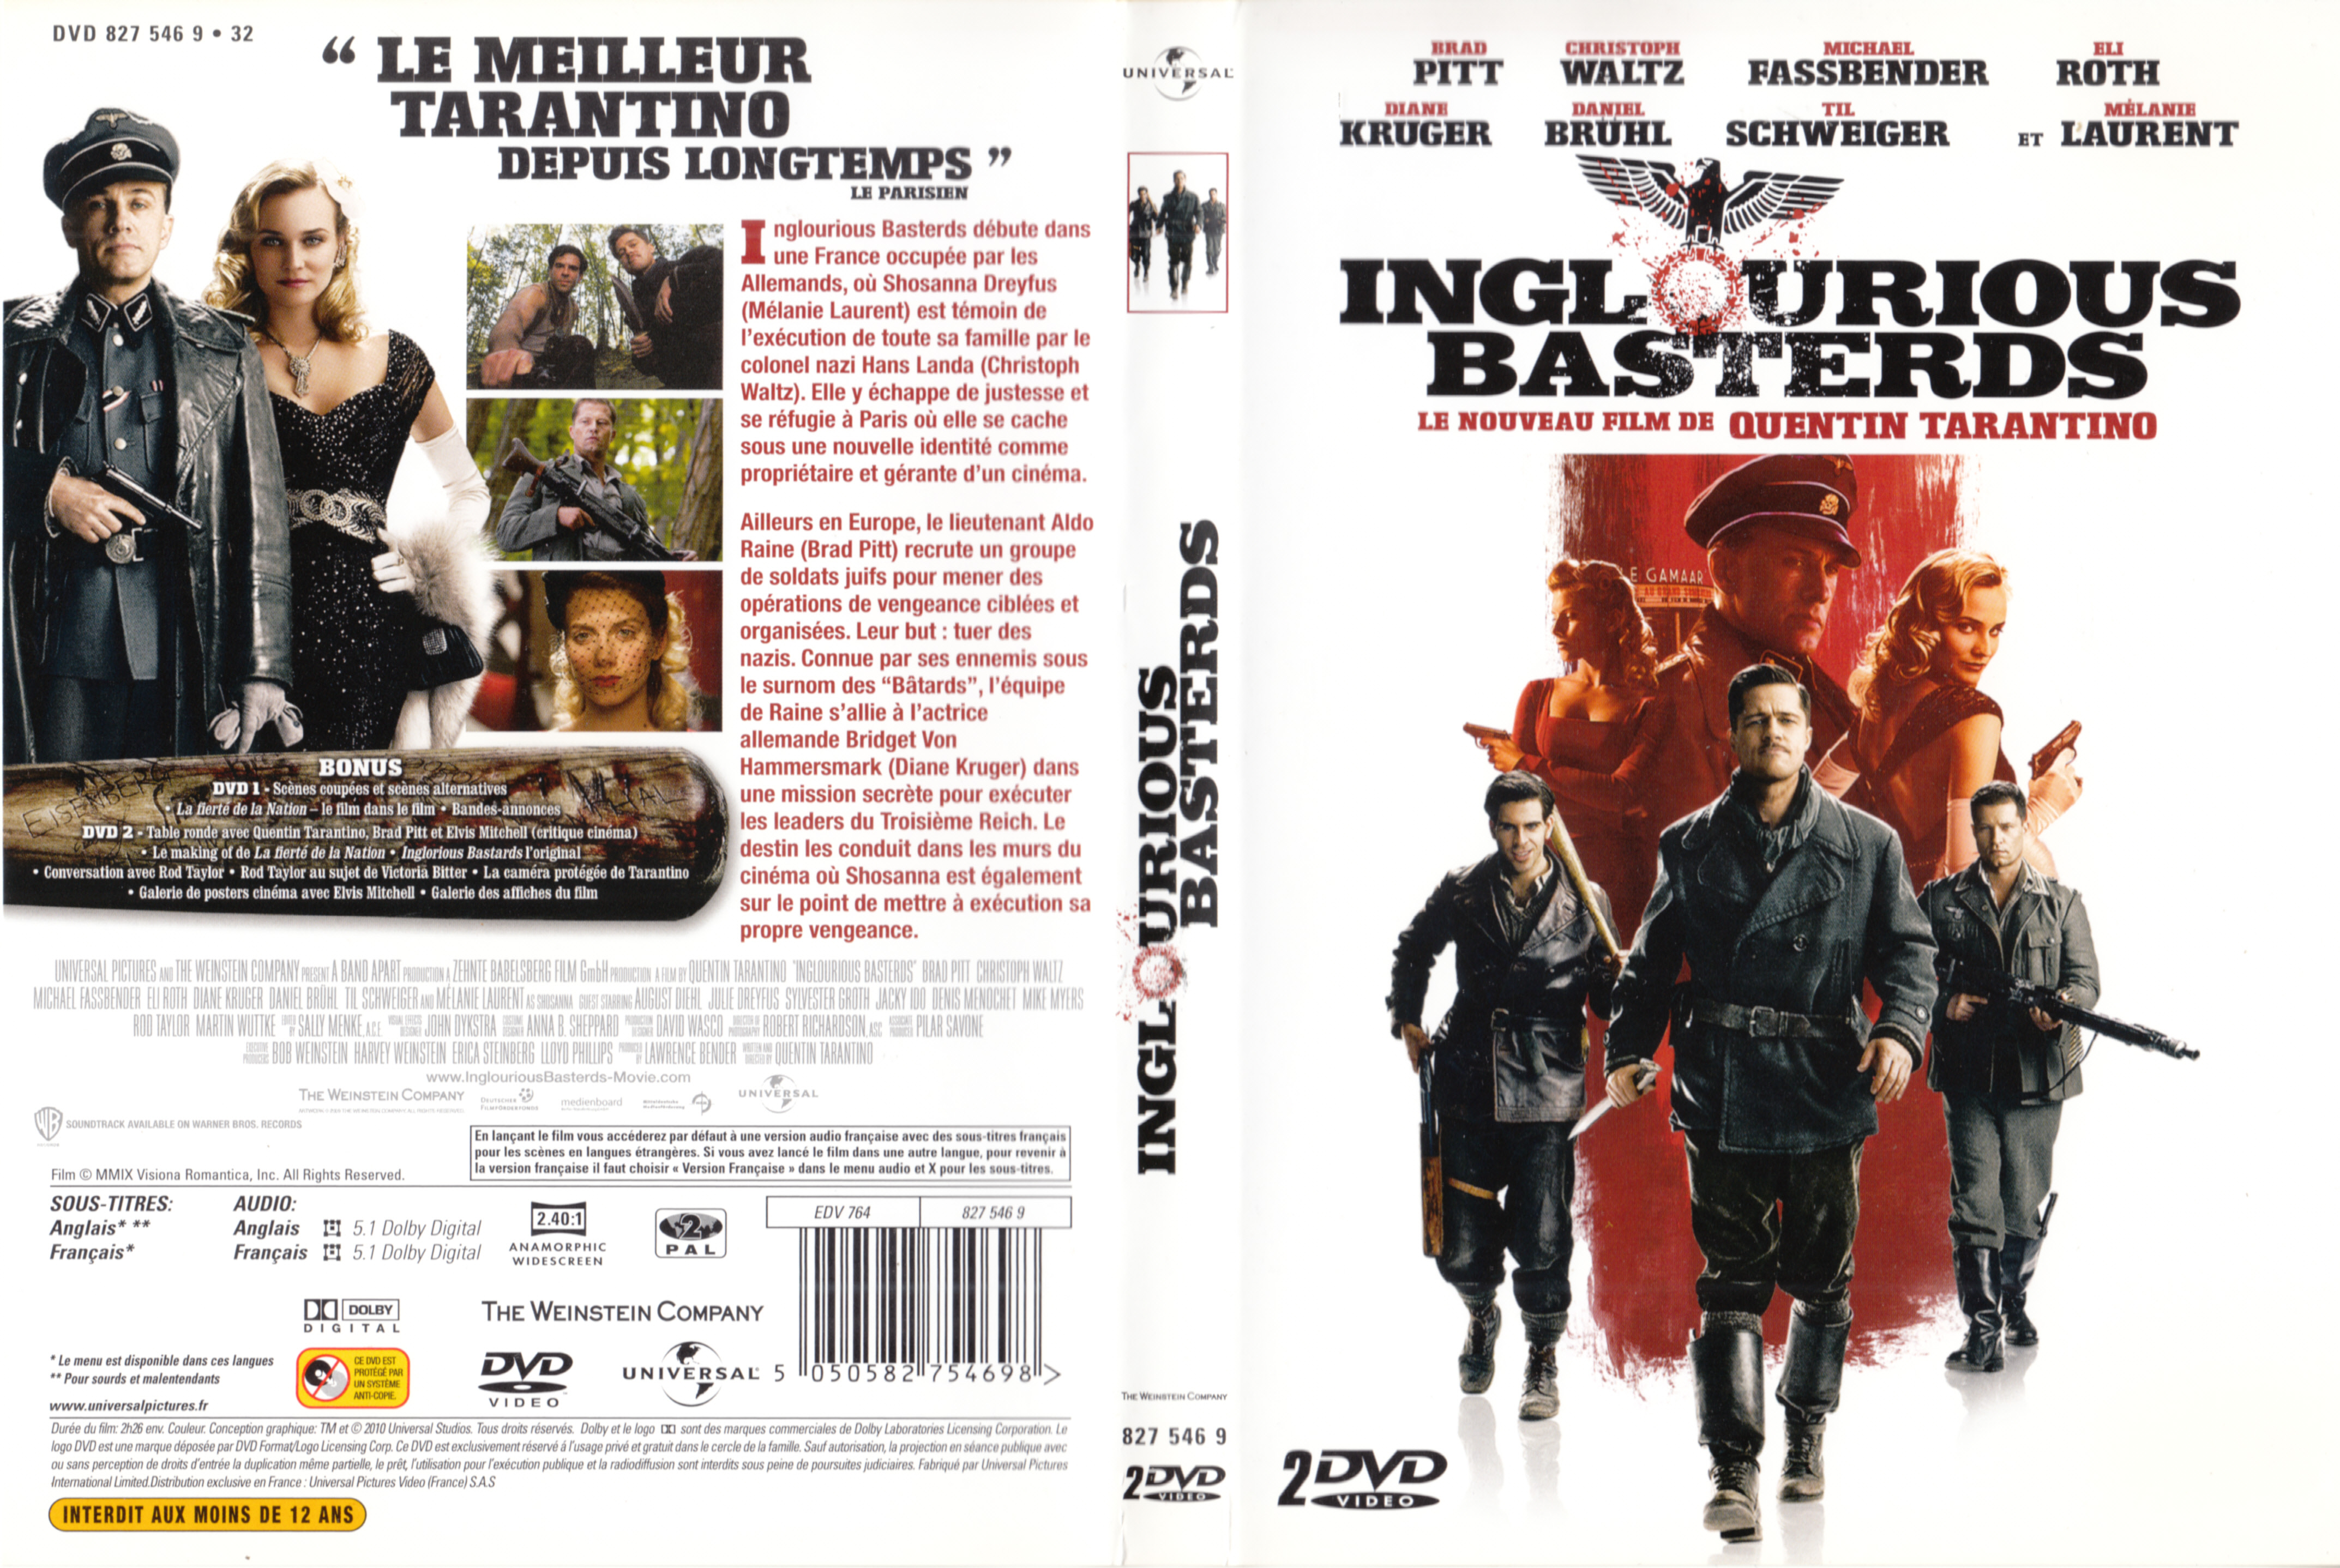 Jaquette DVD Inglourious Basterds v2